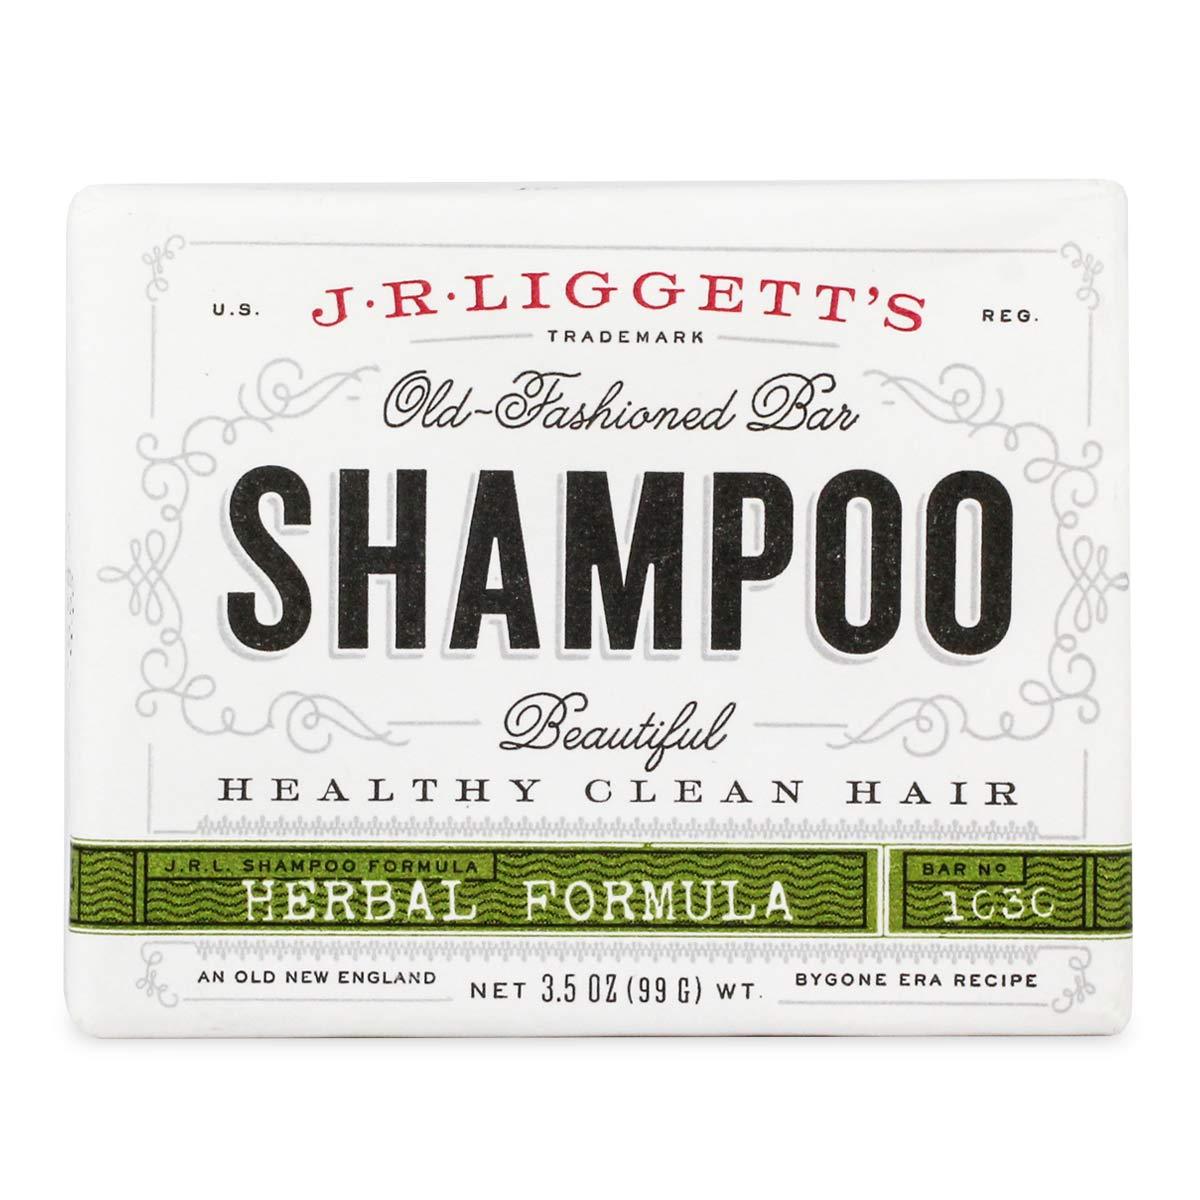 Primary image of Herbal Formula Bar Shampoo